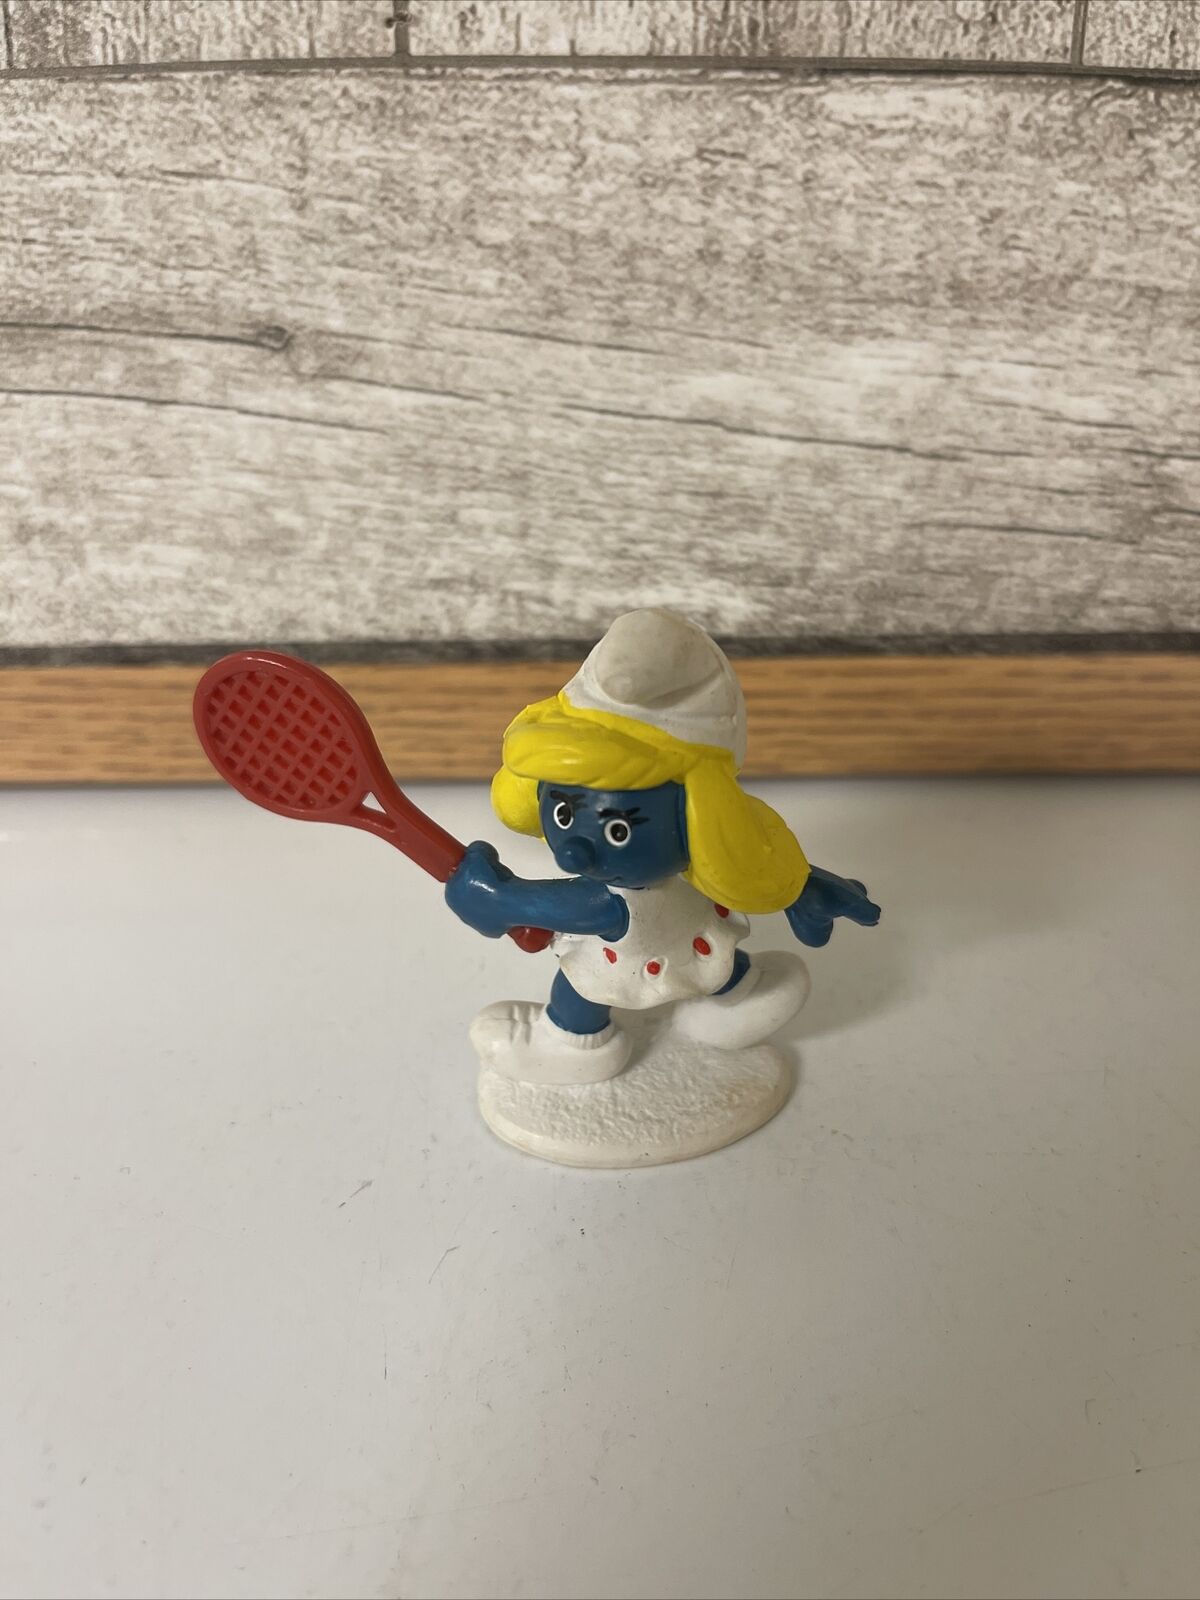 The Smurfs Tennis Player Smurfette Smurf Racket 20135 Vintage Display Figurine